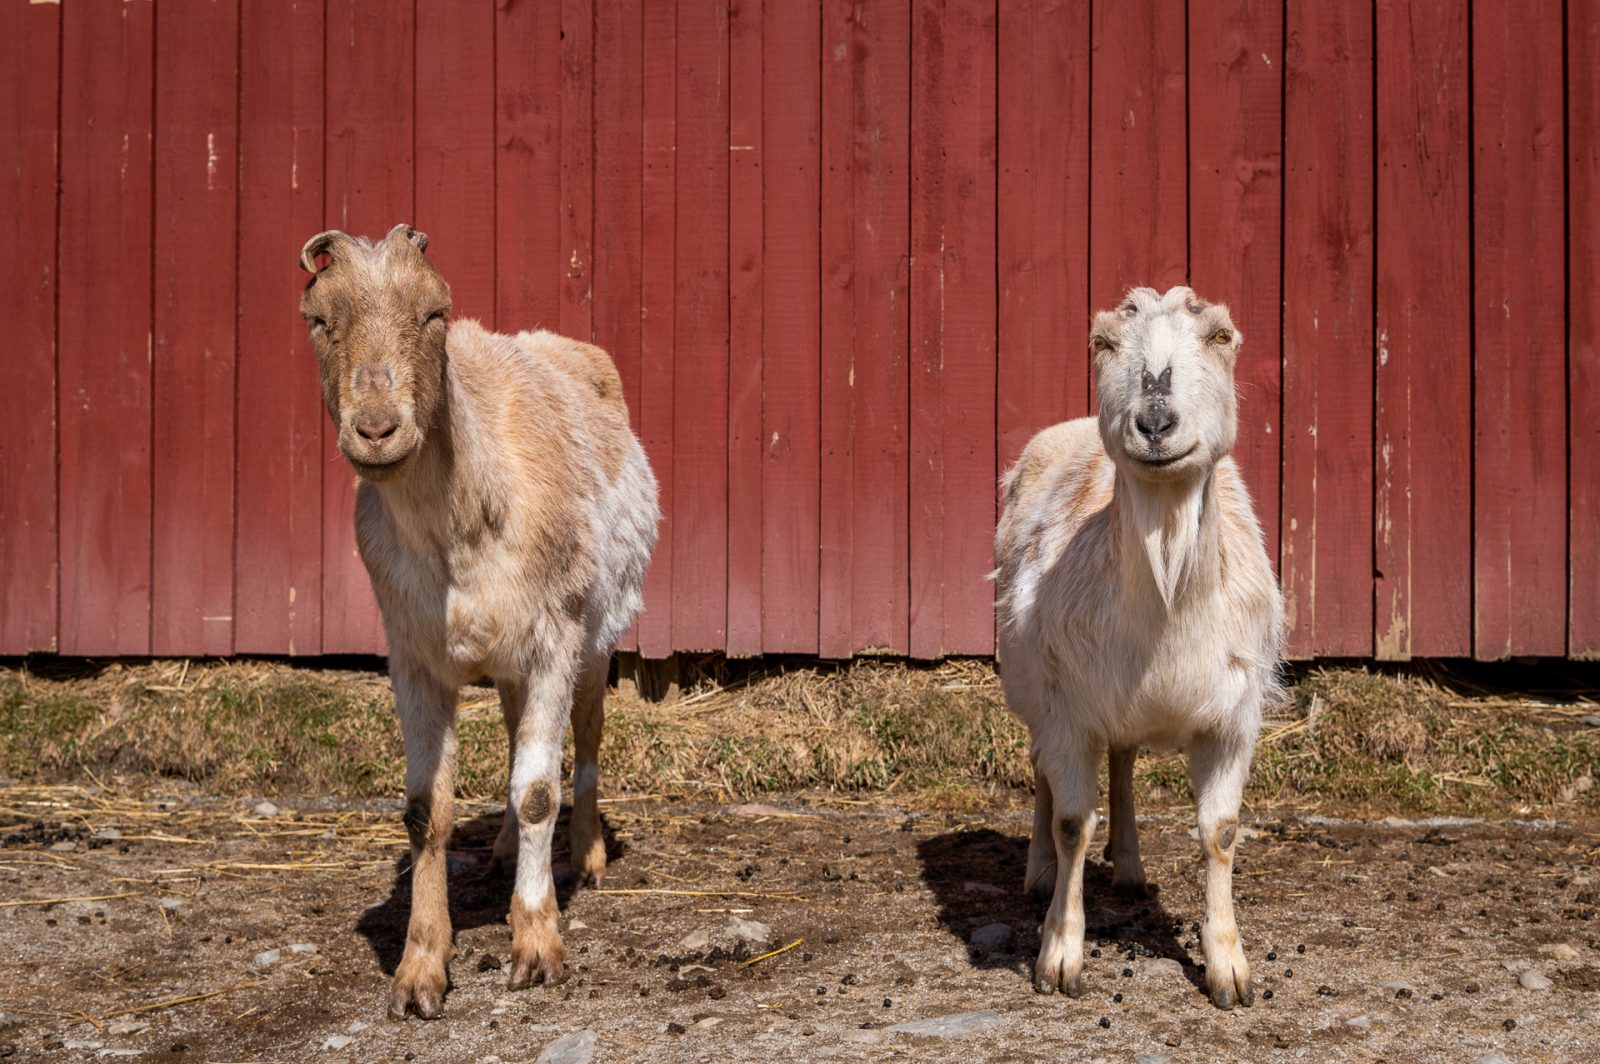 Bruce and Cynthia goats